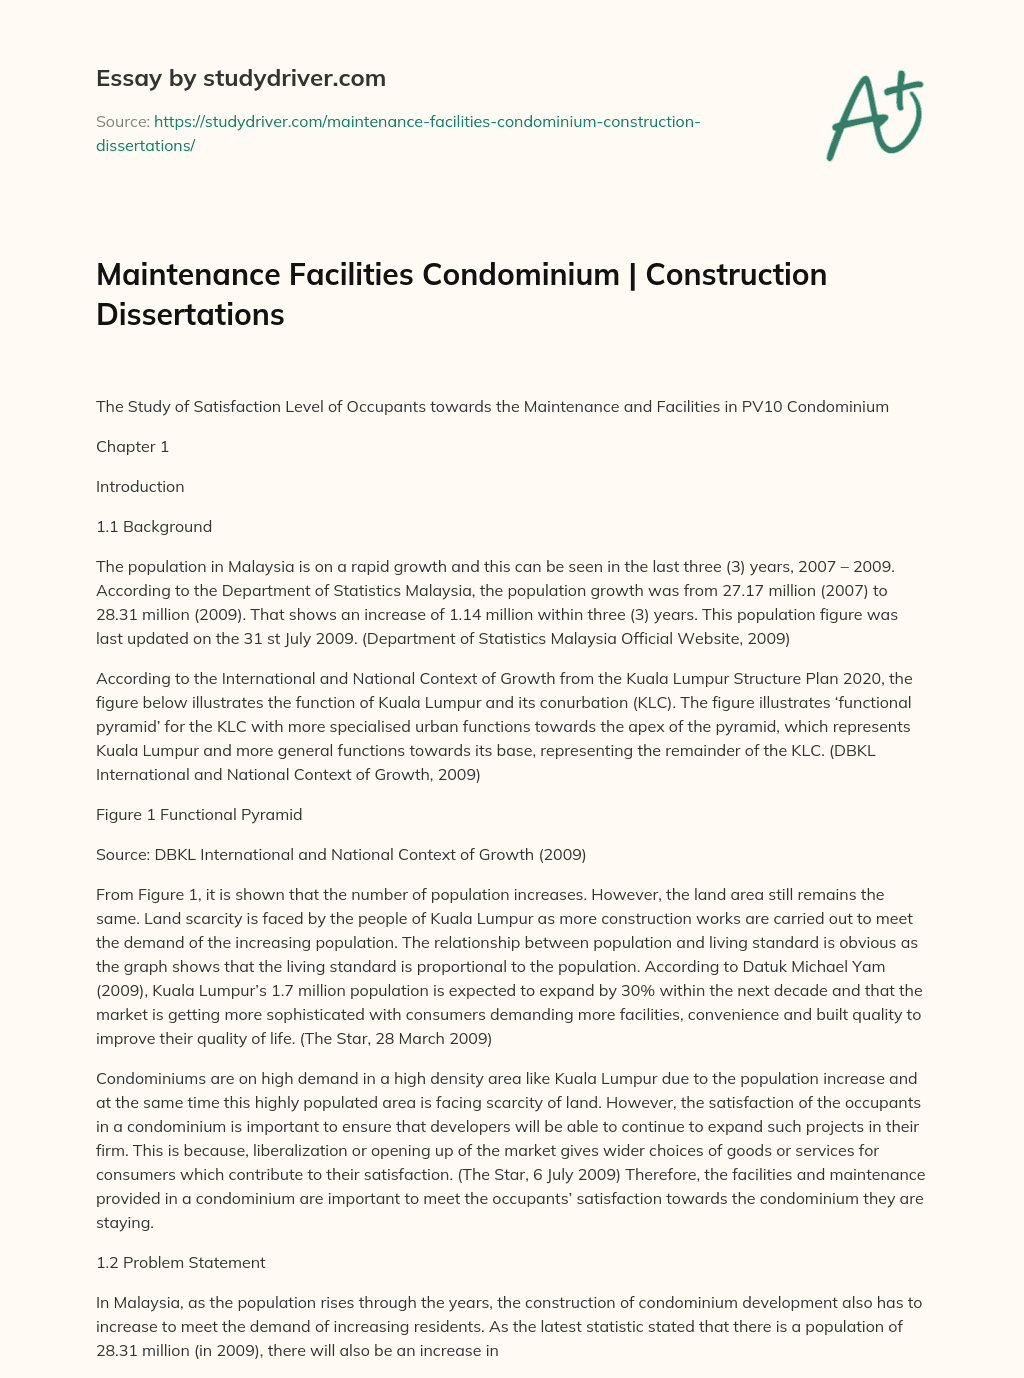 Maintenance Facilities Condominium | Construction Dissertations essay